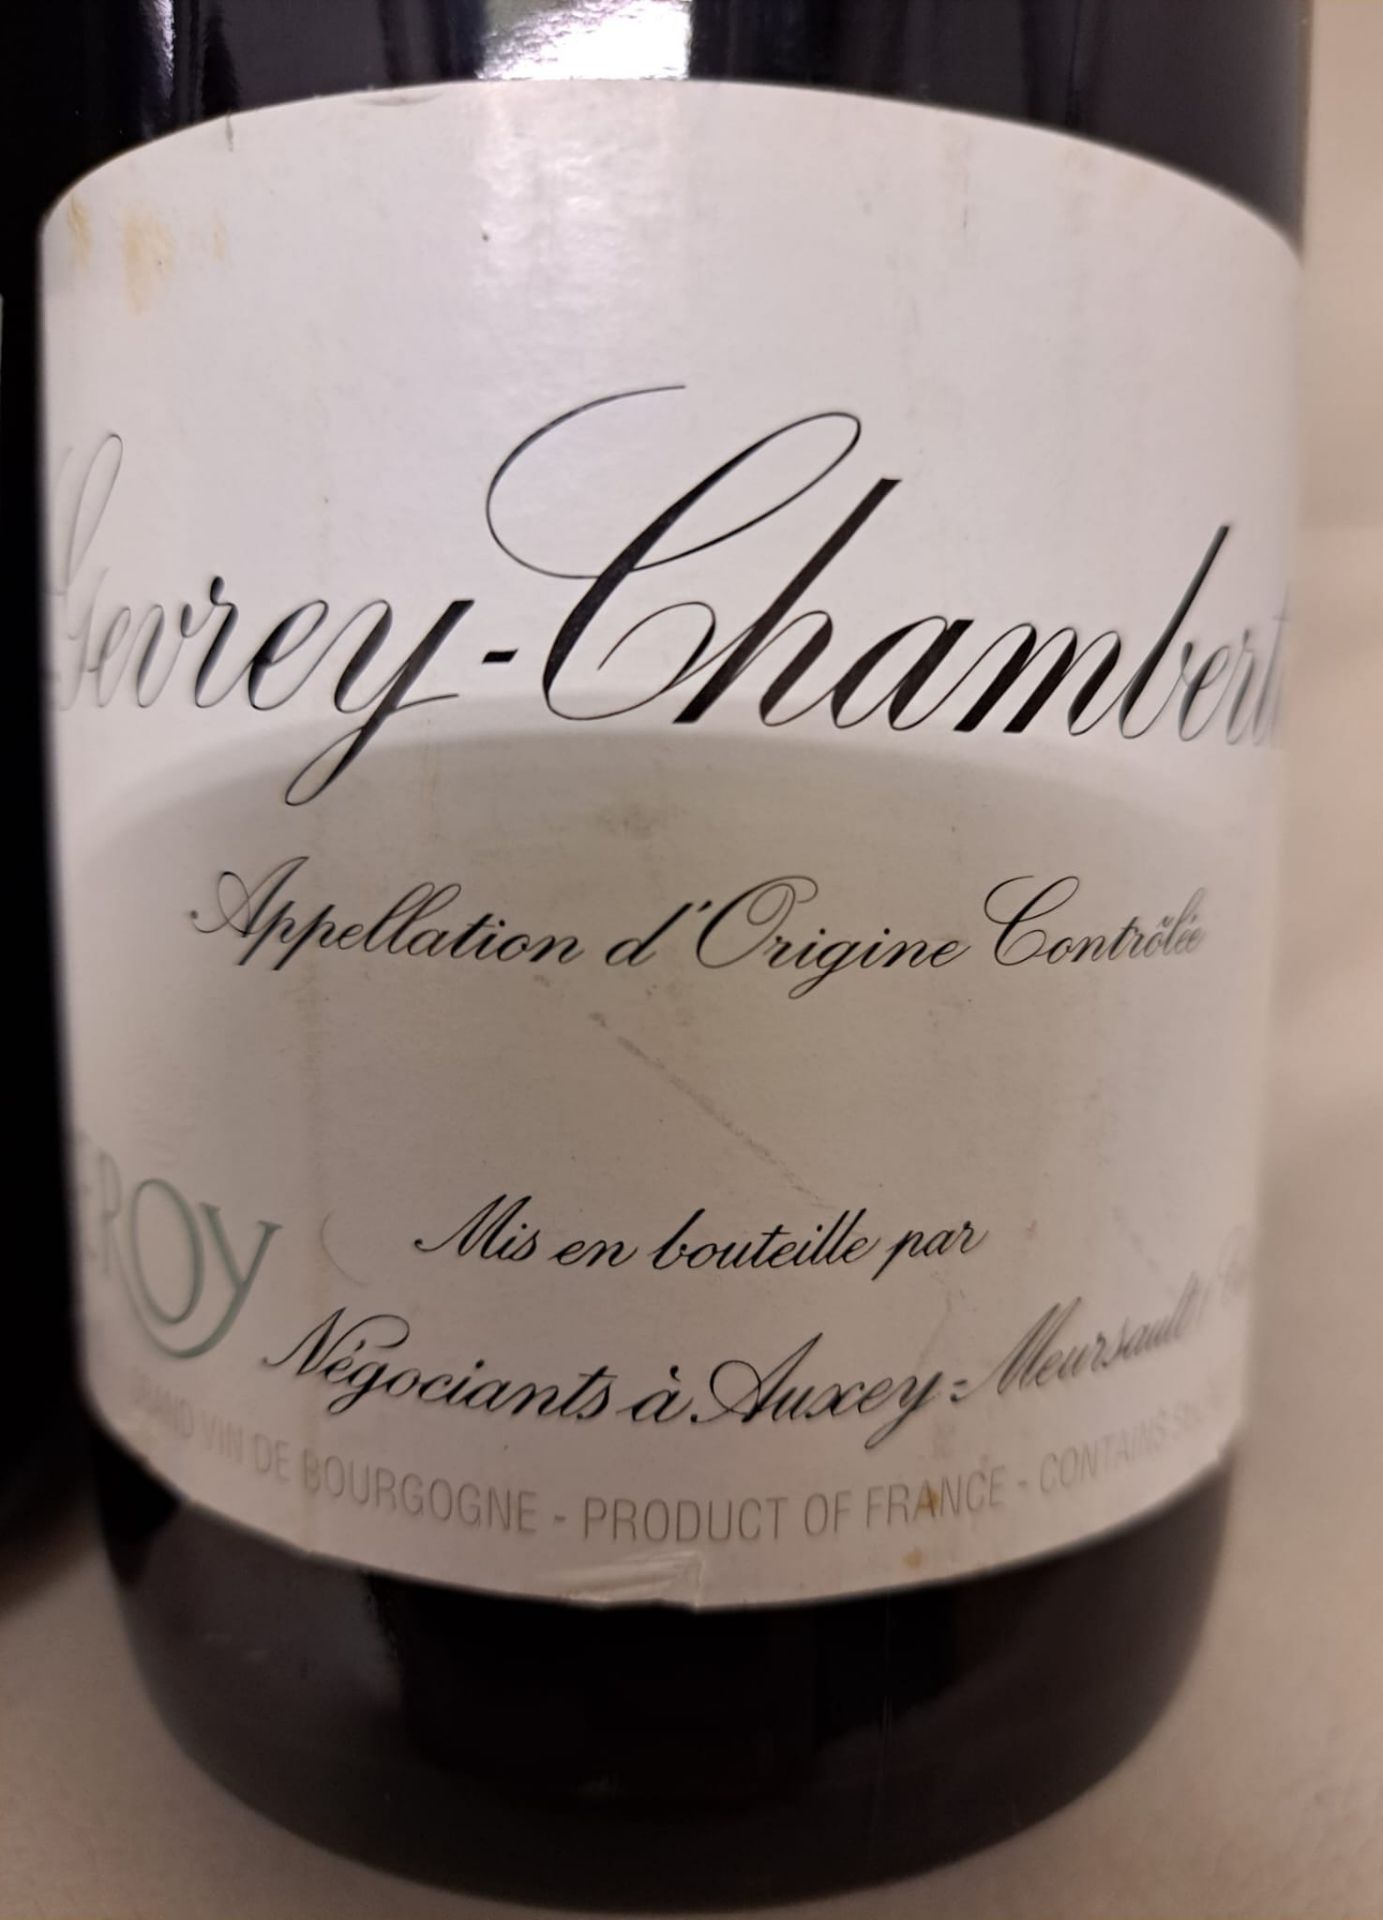 1 x Bottle of 2011 Gevrey Chambertin, Maison Leroy Red Wine - Retail Price £1000 - Ref: WAS011B - - Image 2 of 3